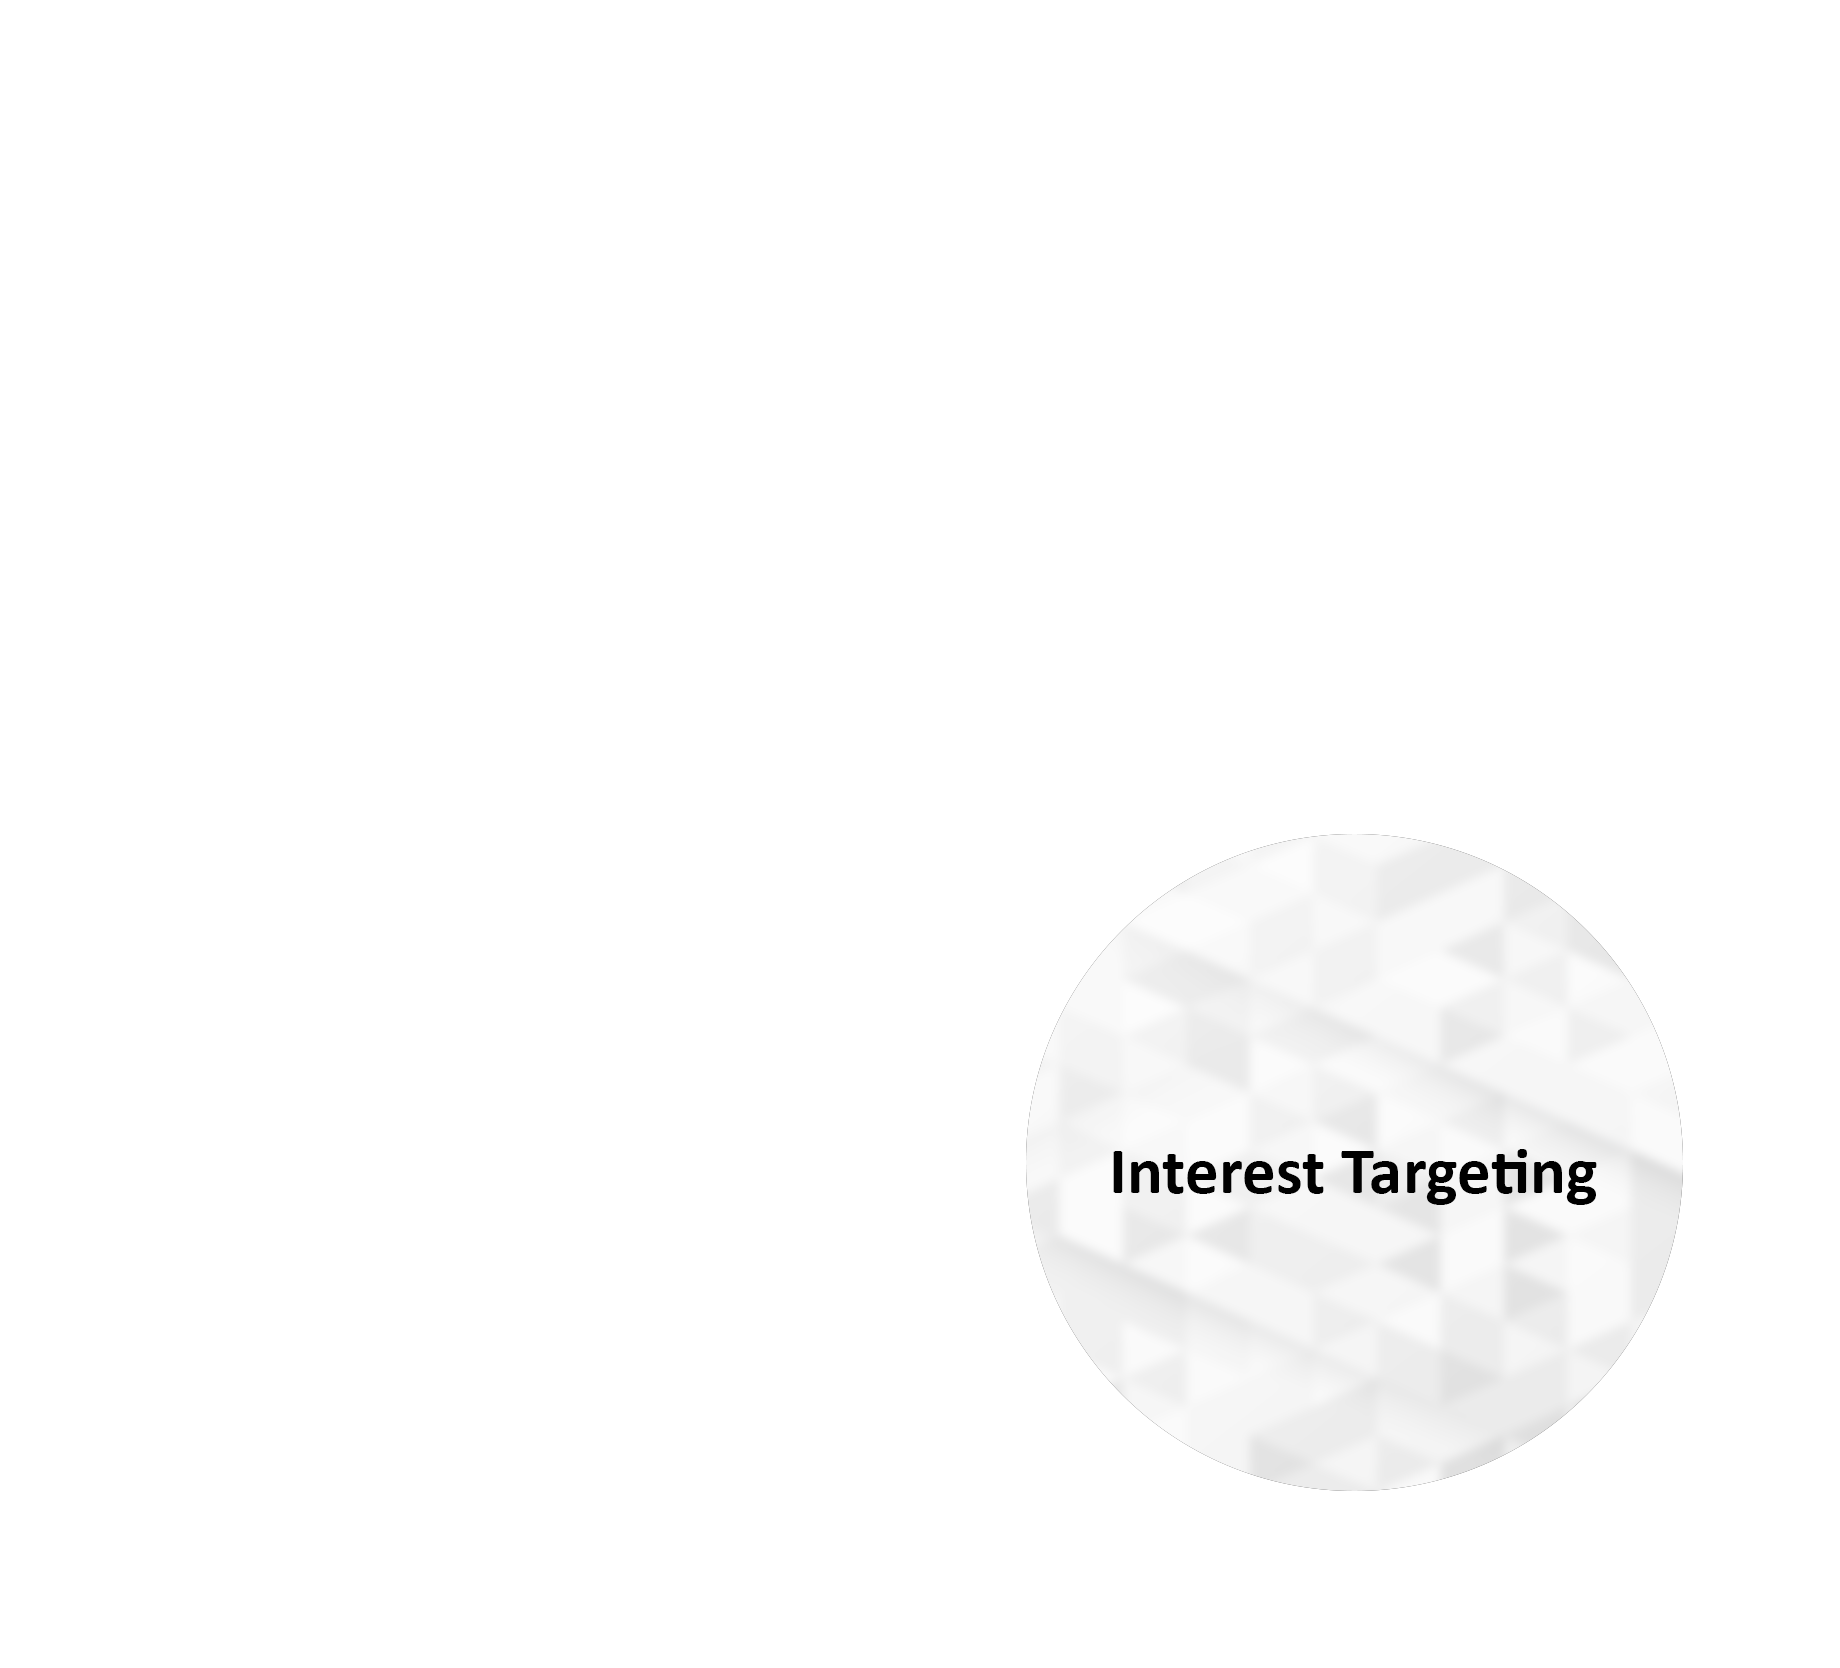 Interest Targeting